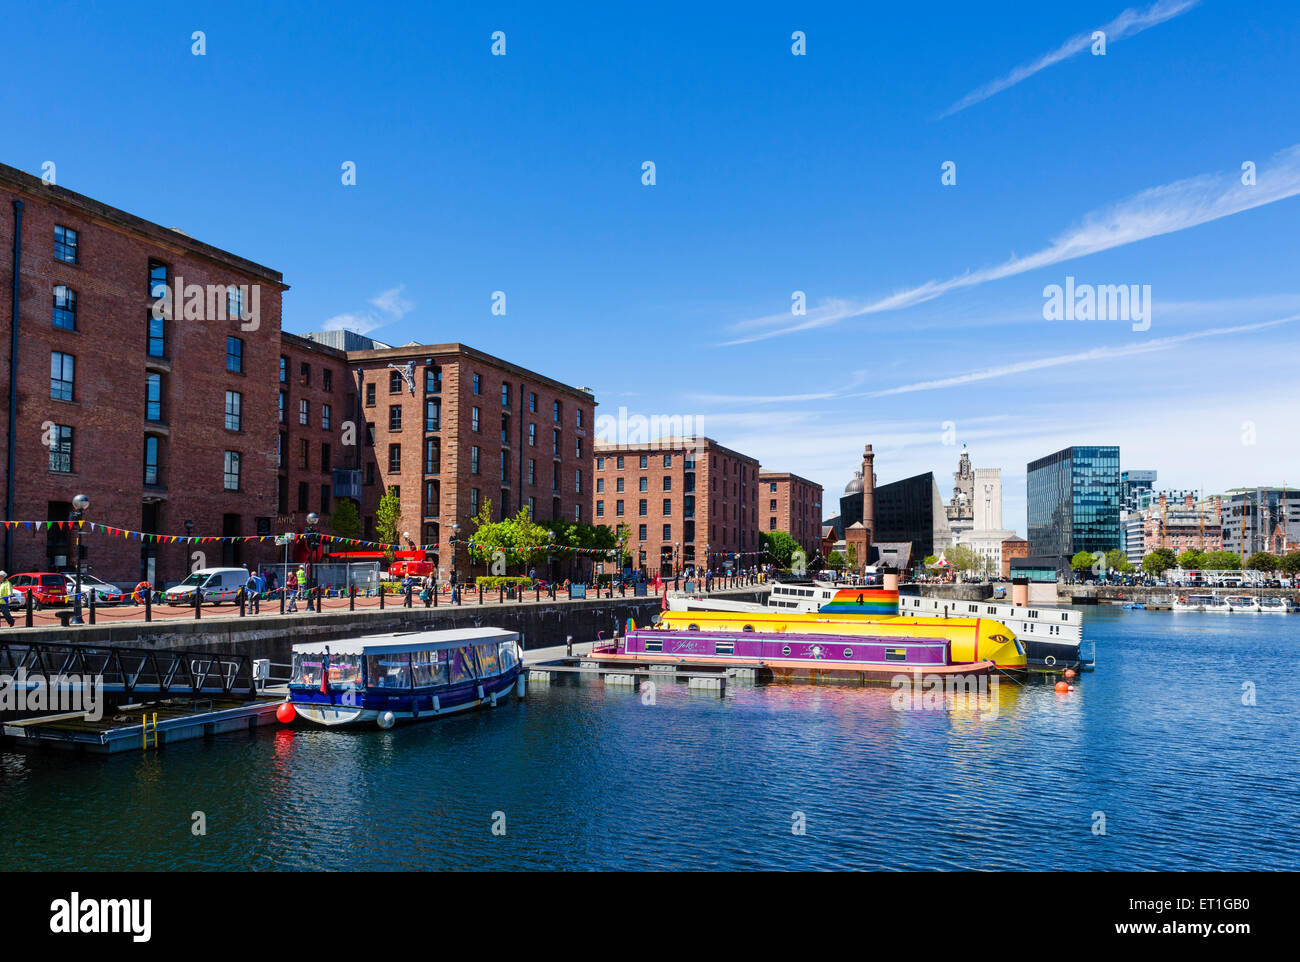 View over Saltwater Dock and Saltwater Quay towards Albert Dock, Liverpool, Merseyside, England, UK Stock Photo